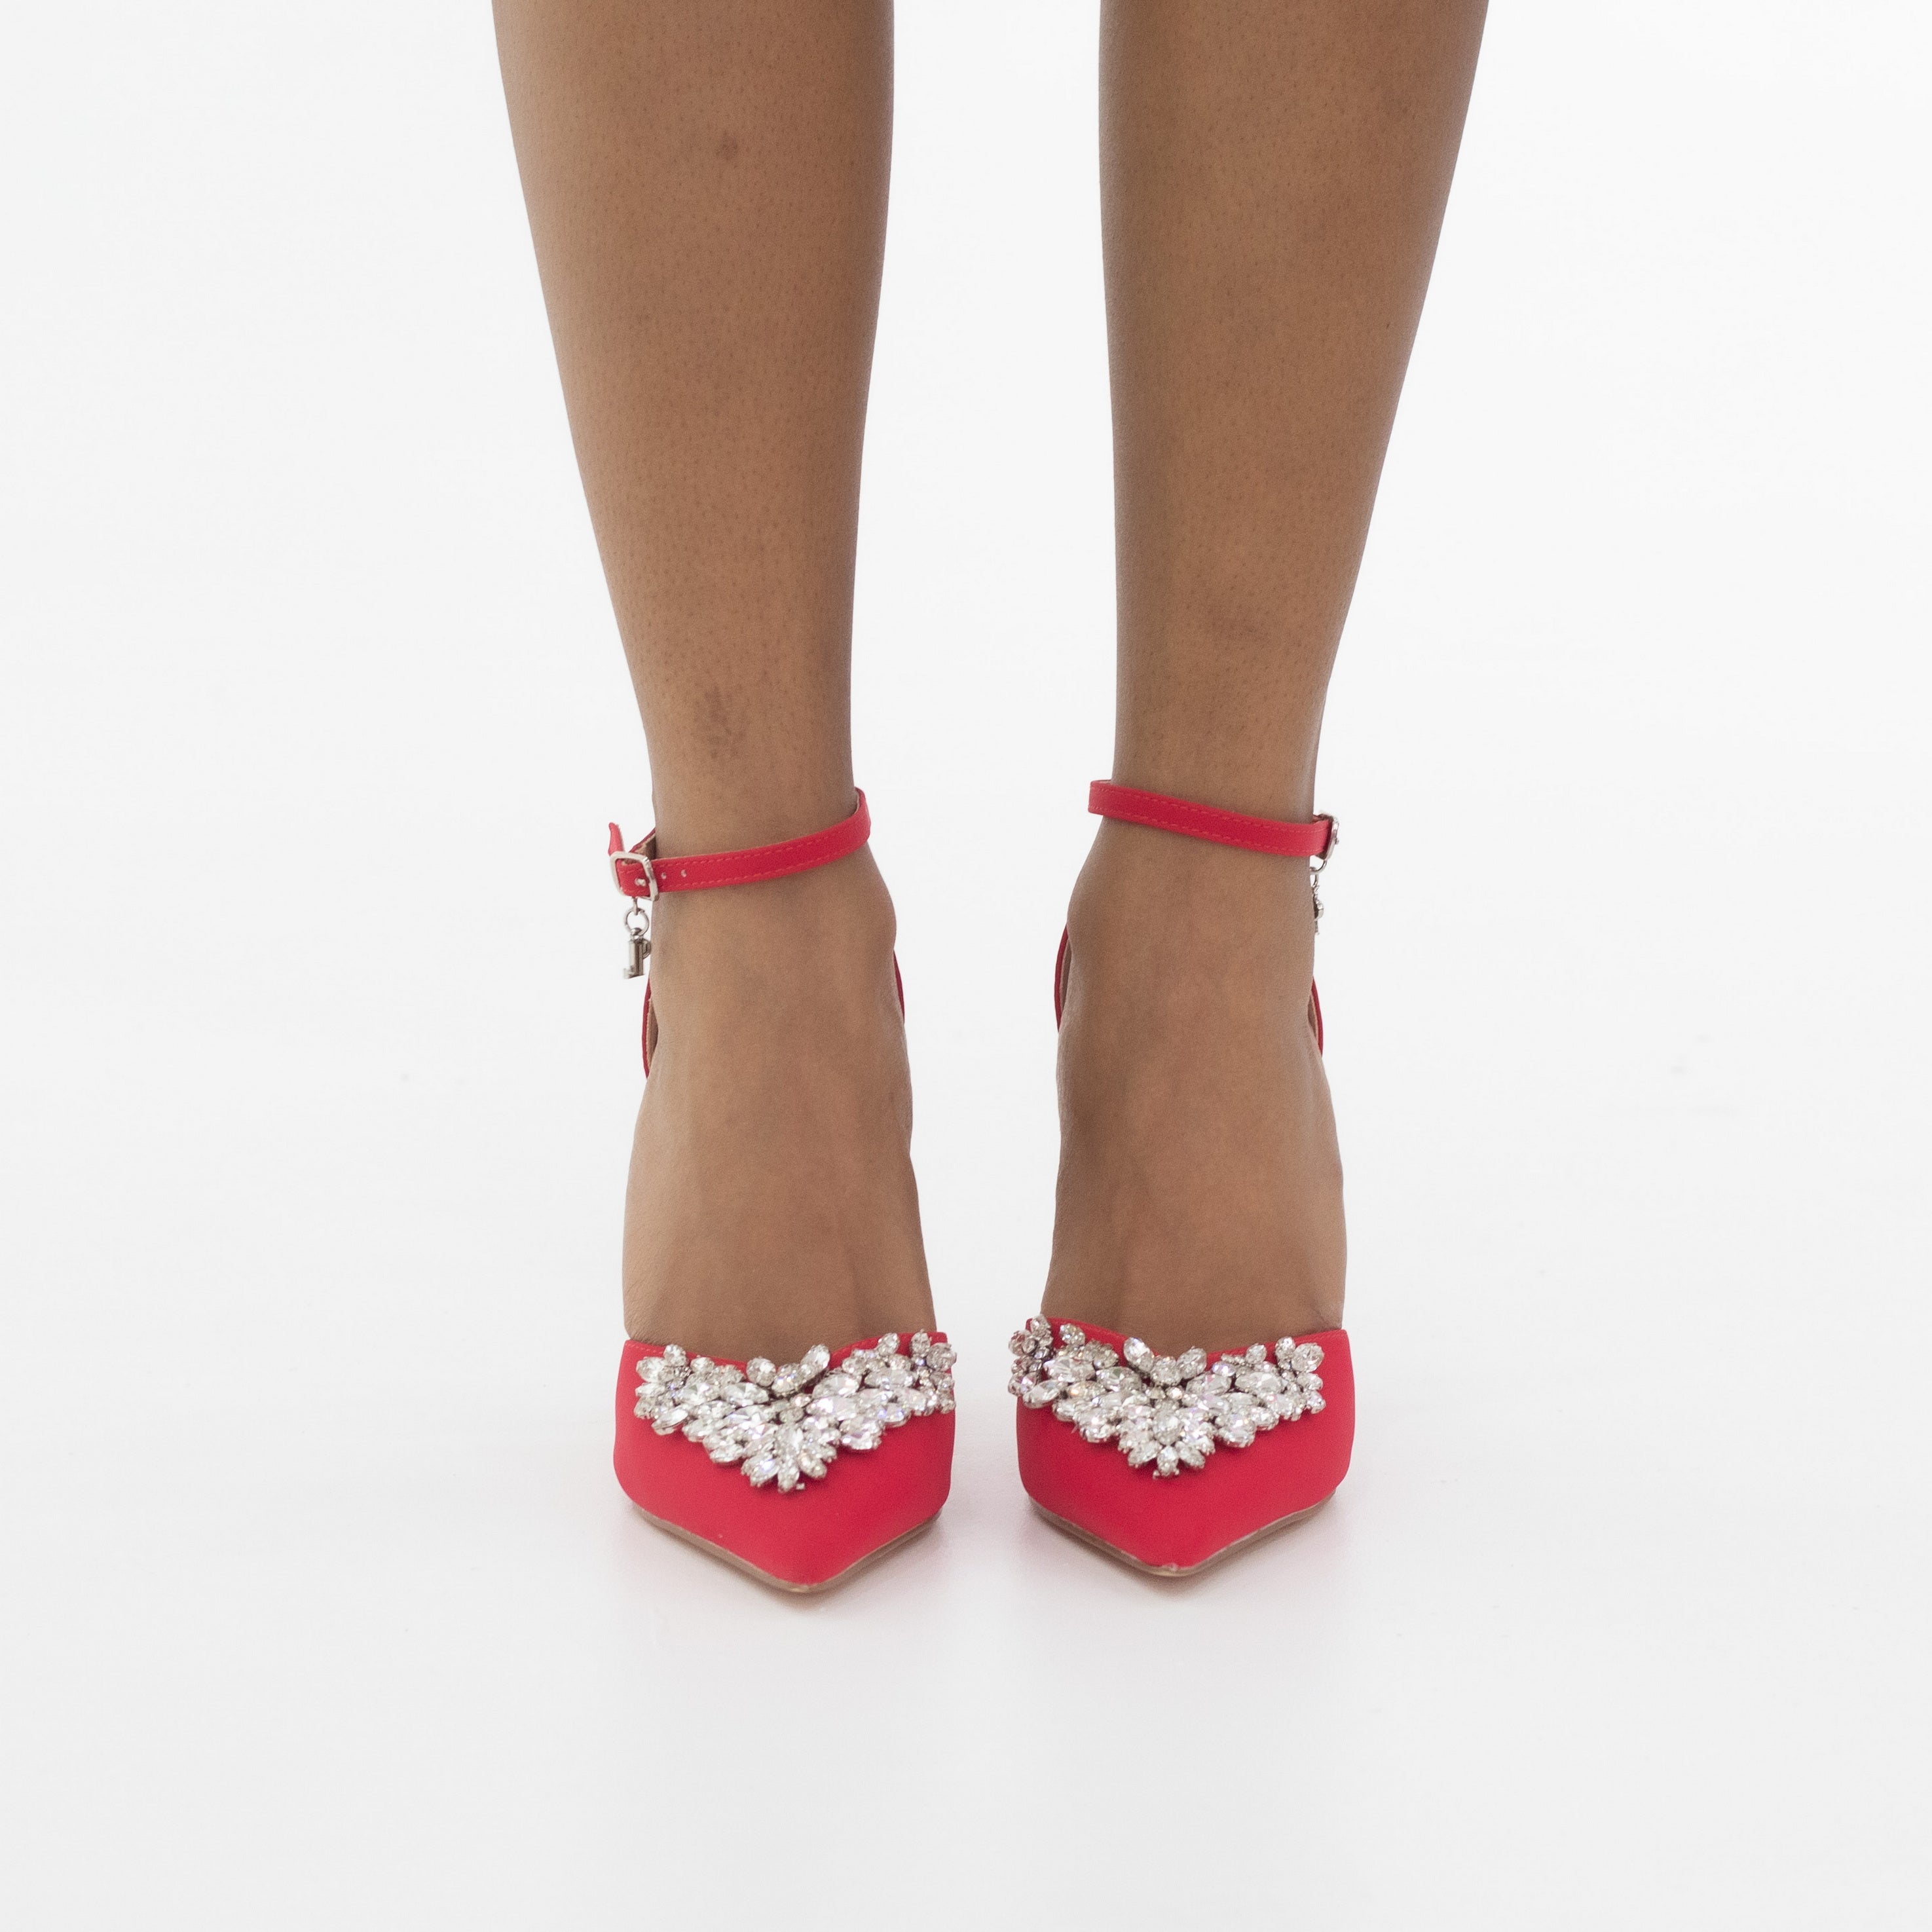 Kora mid heel SATIN PU with v-shaped diamante trim red